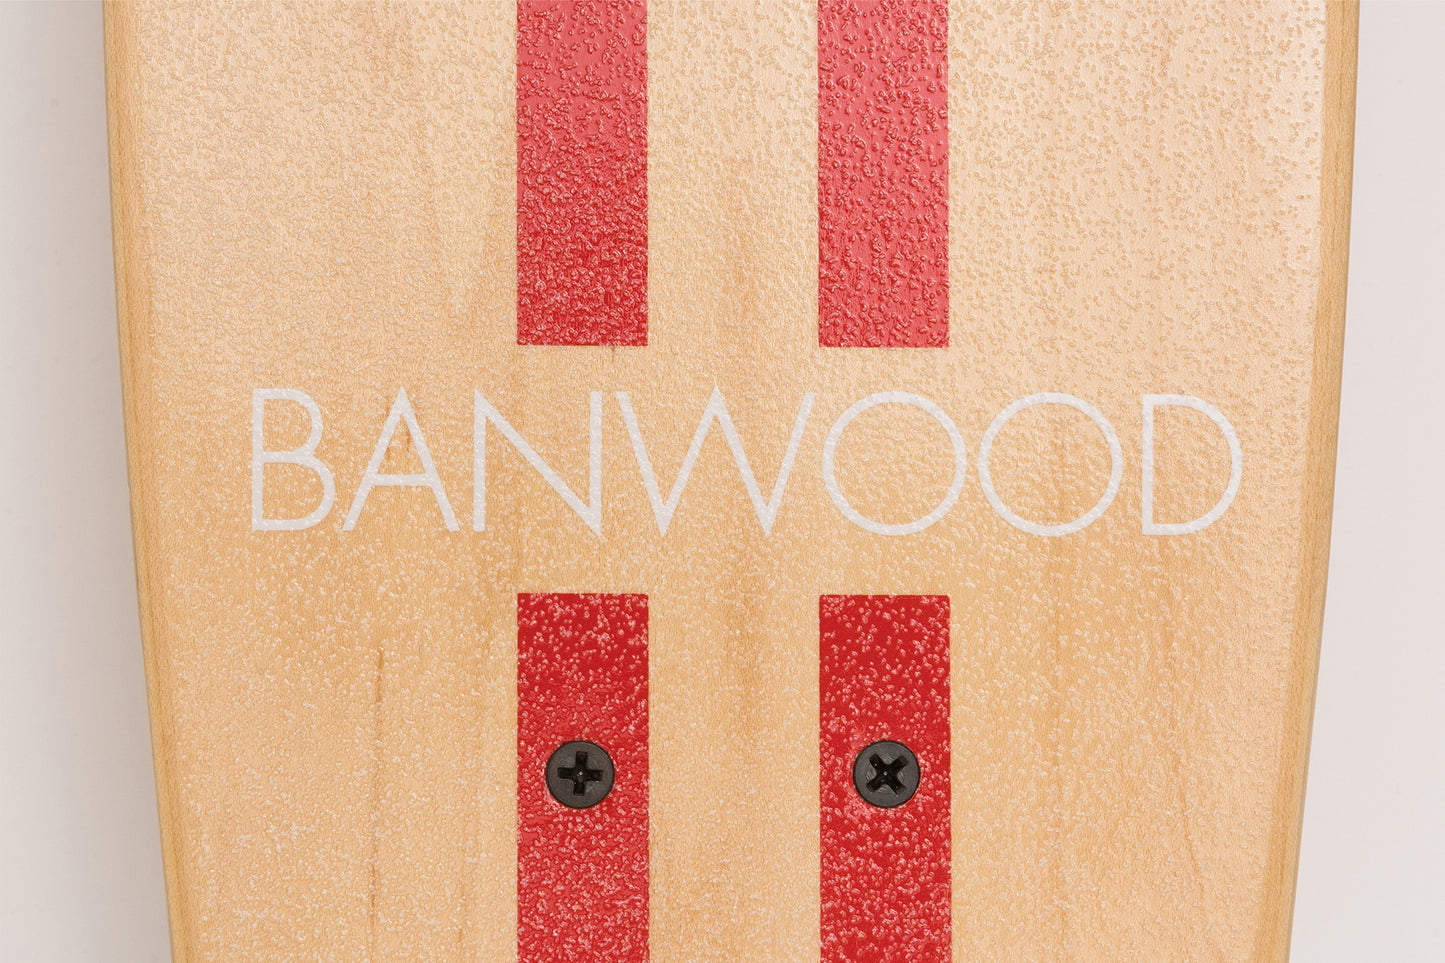 Banwood Skateboard rot